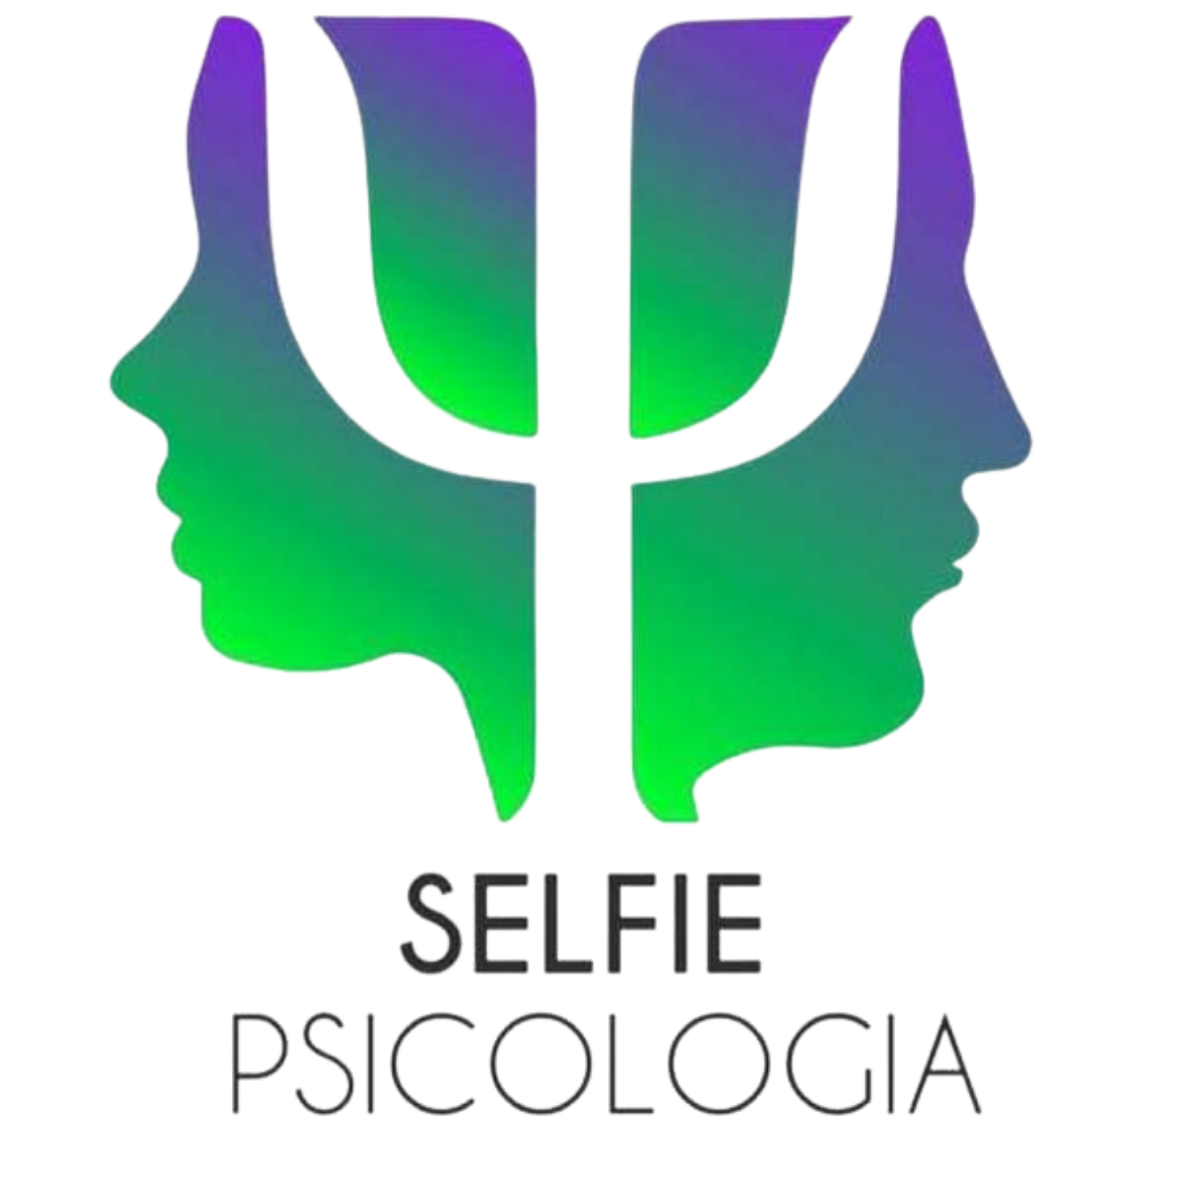 selfie | Links to Instagram, Facebook - Linkr